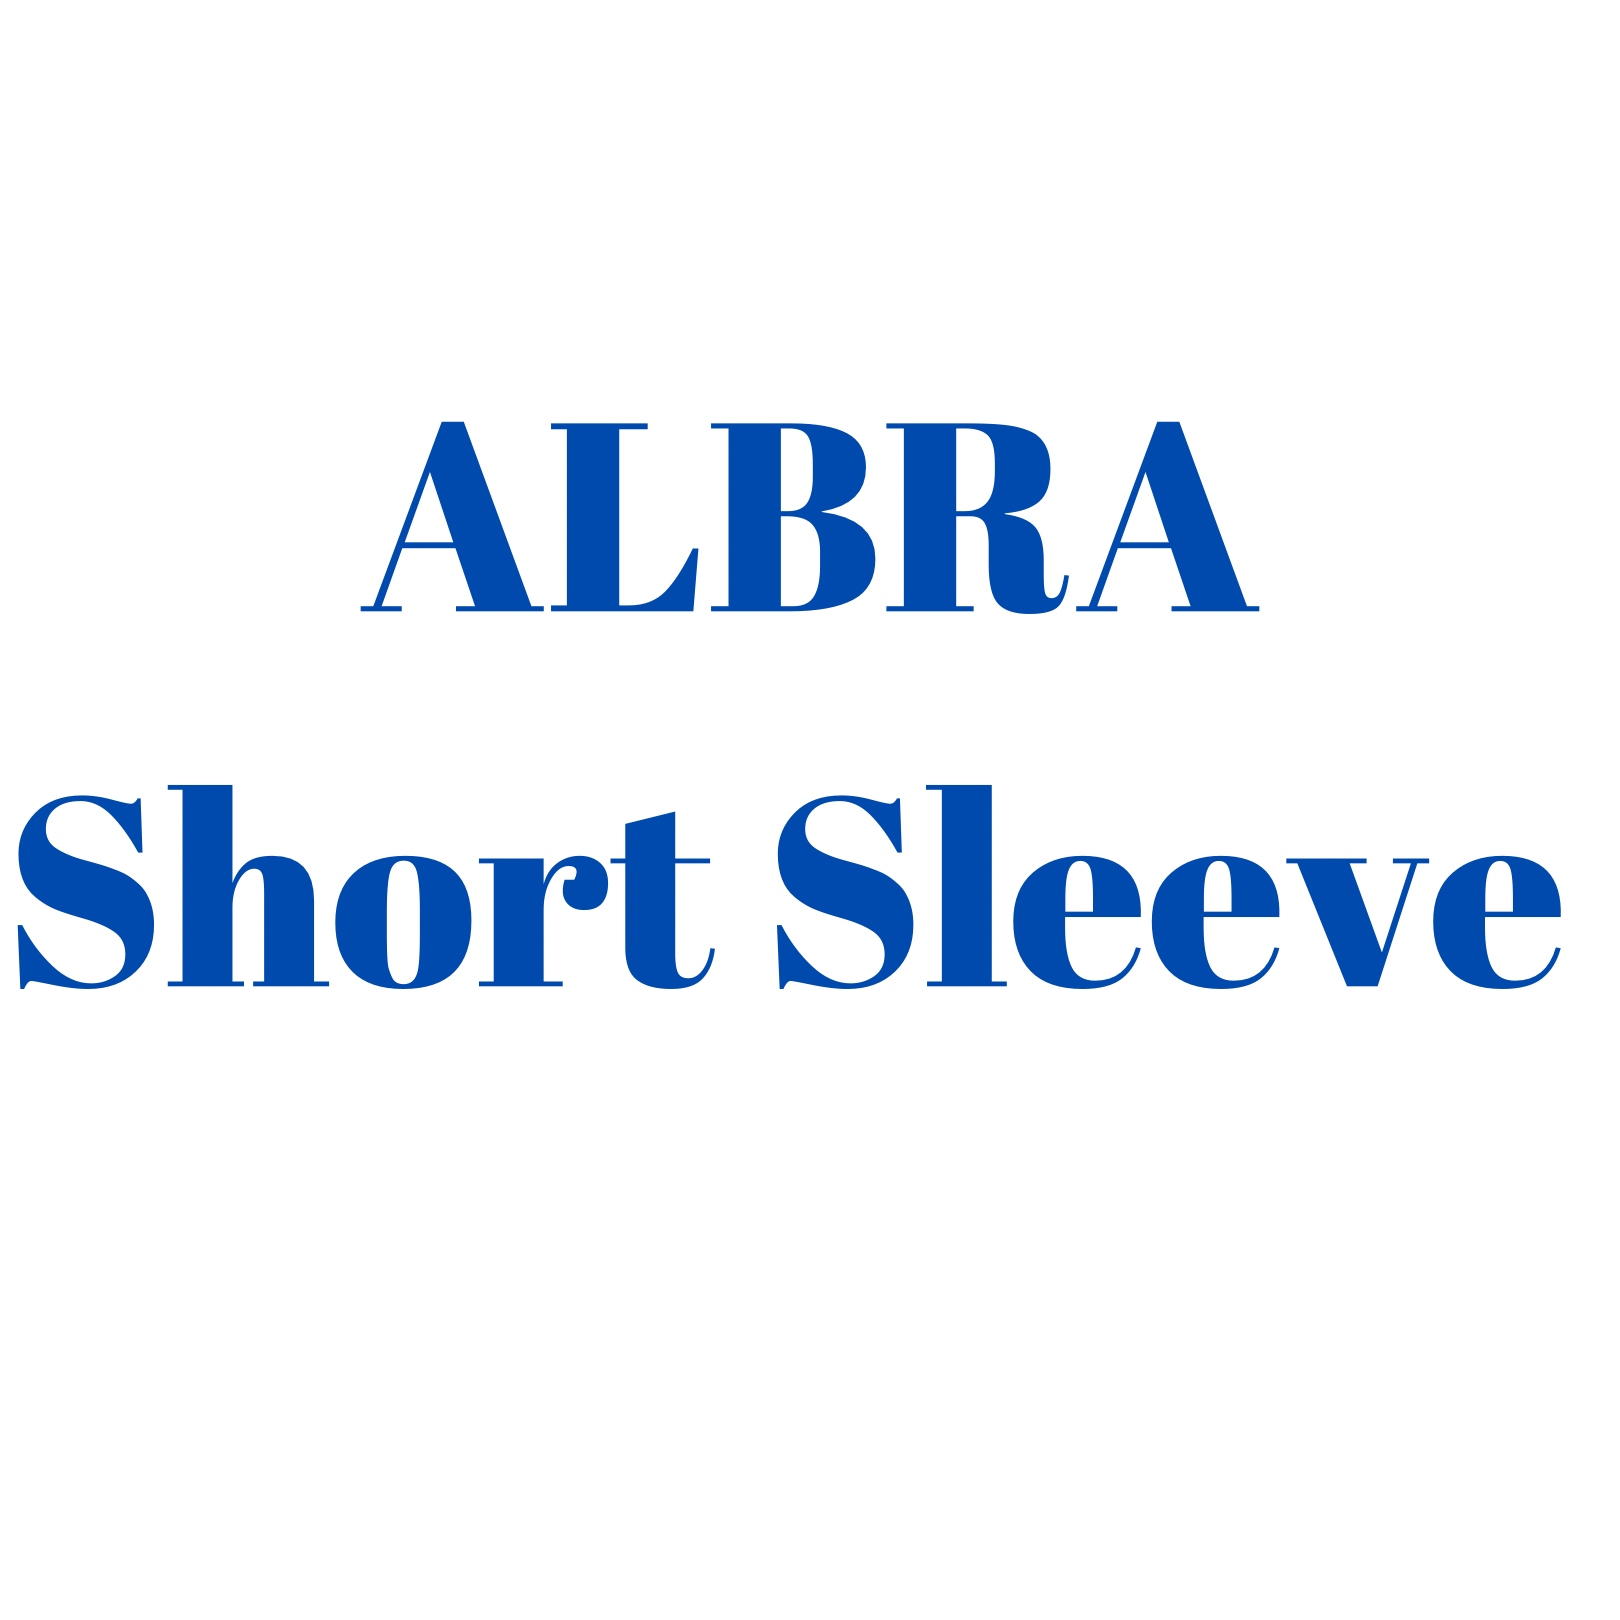 ALBRA Short Sleeve